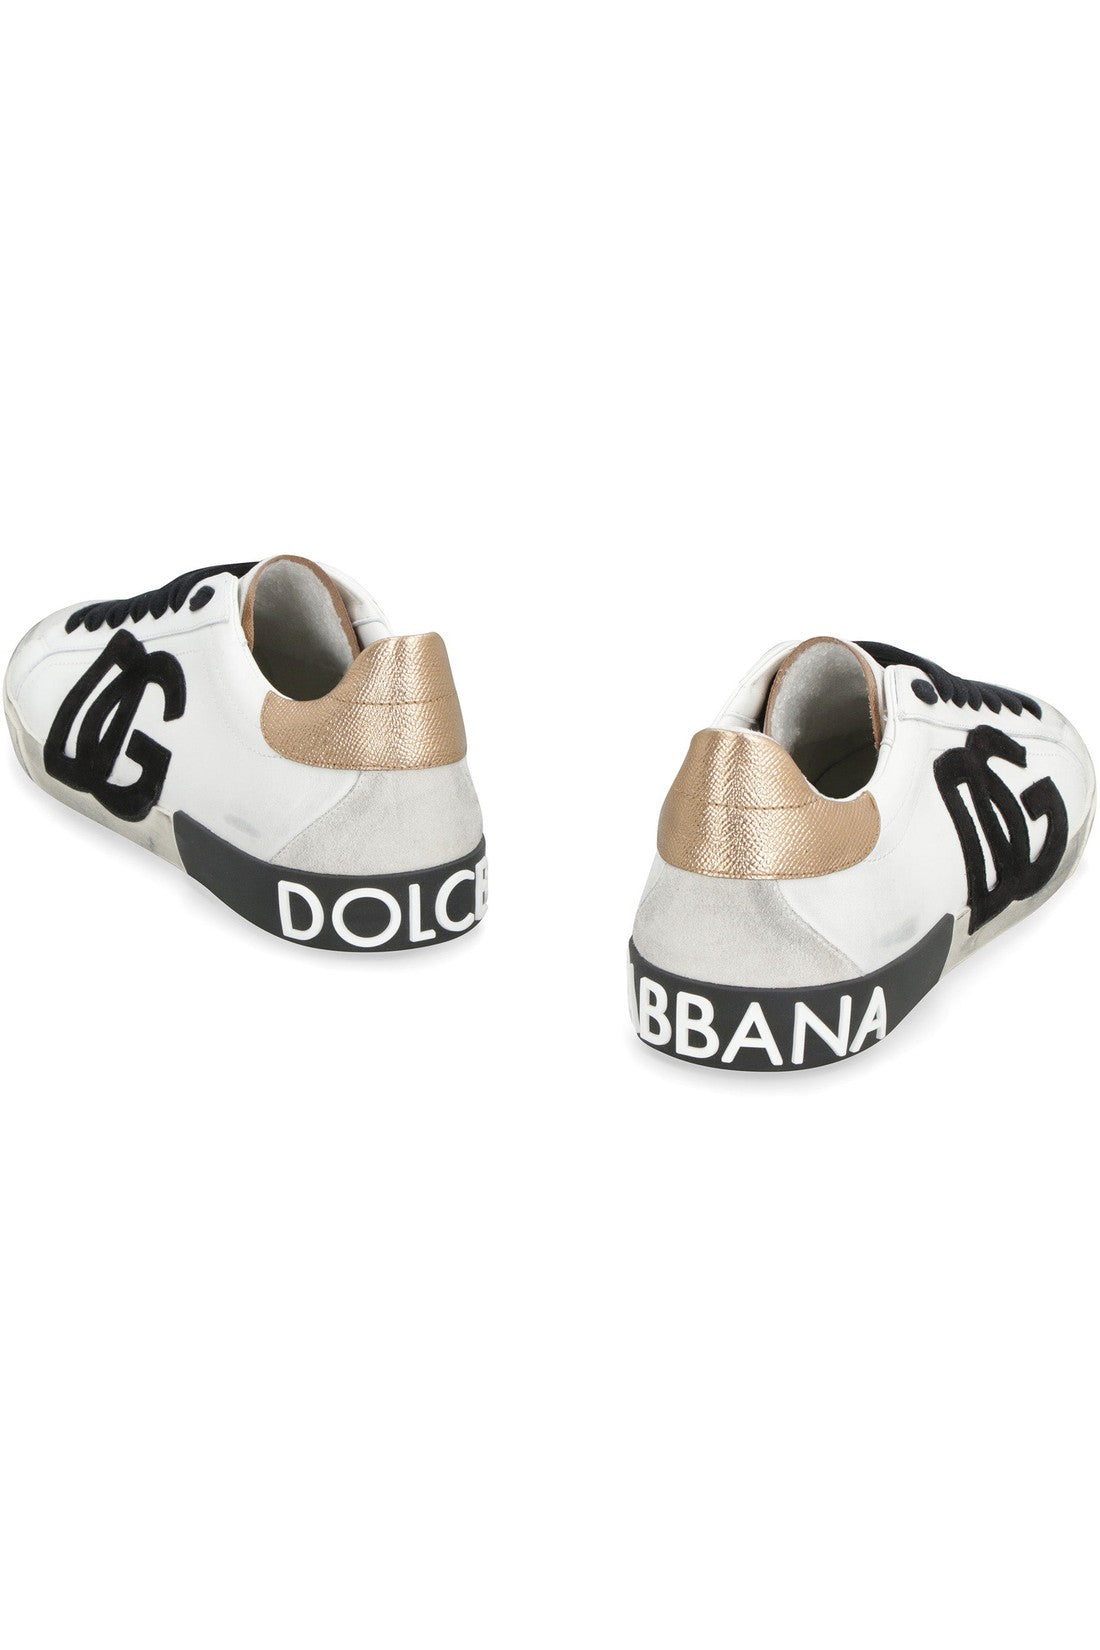 Dolce & Gabbana-OUTLET-SALE-Portofino leather sneakers-ARCHIVIST